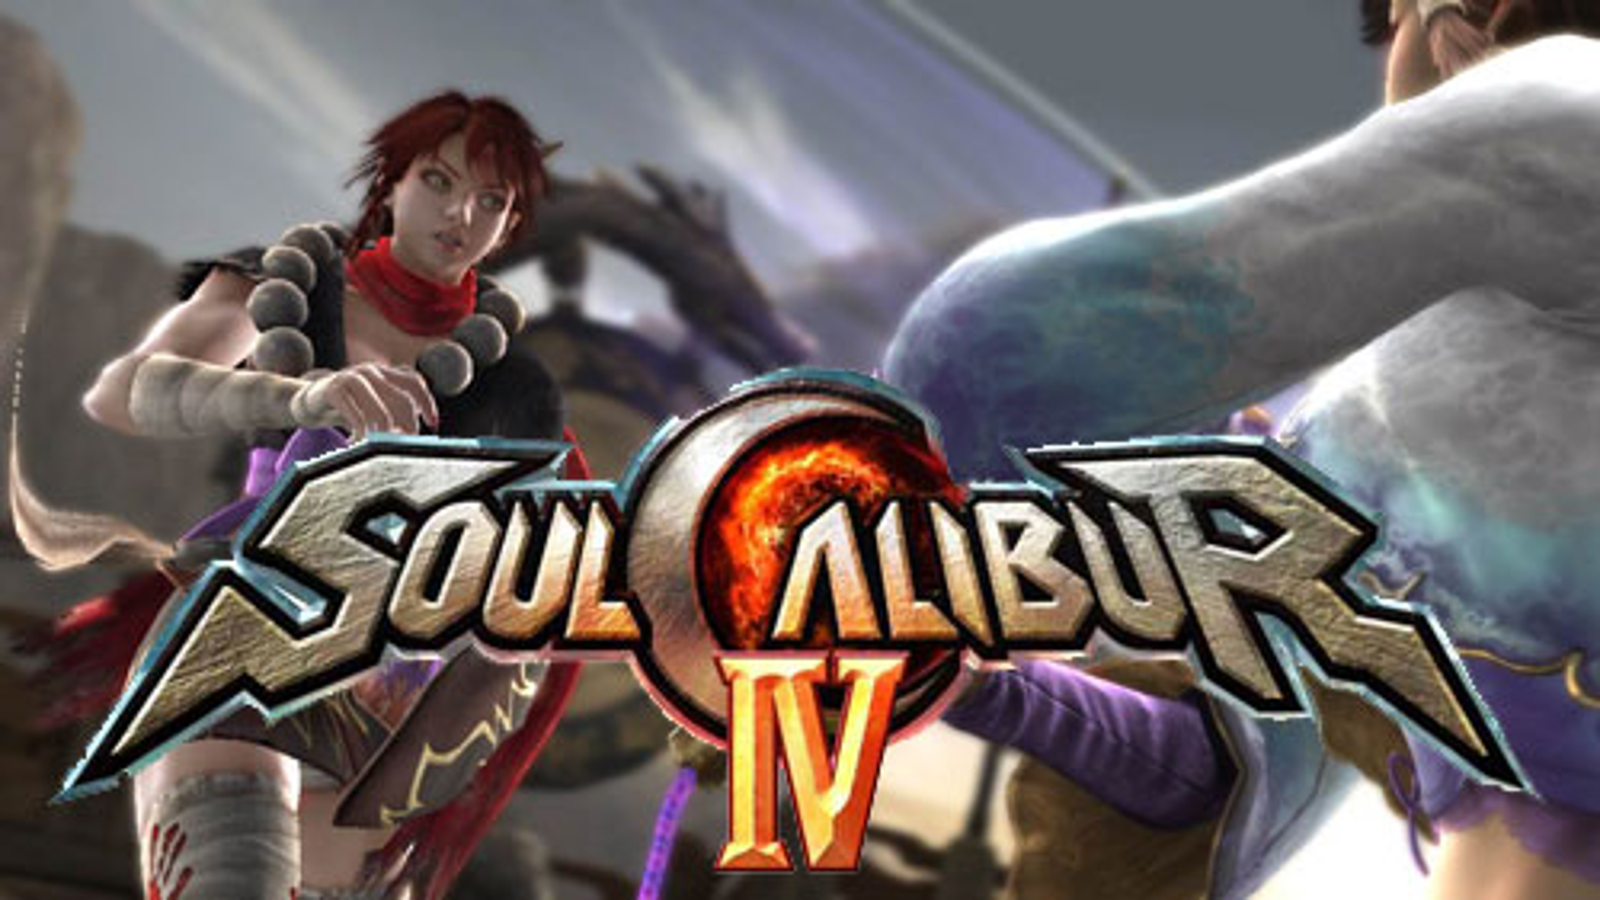 soulcalibur iv initial release date